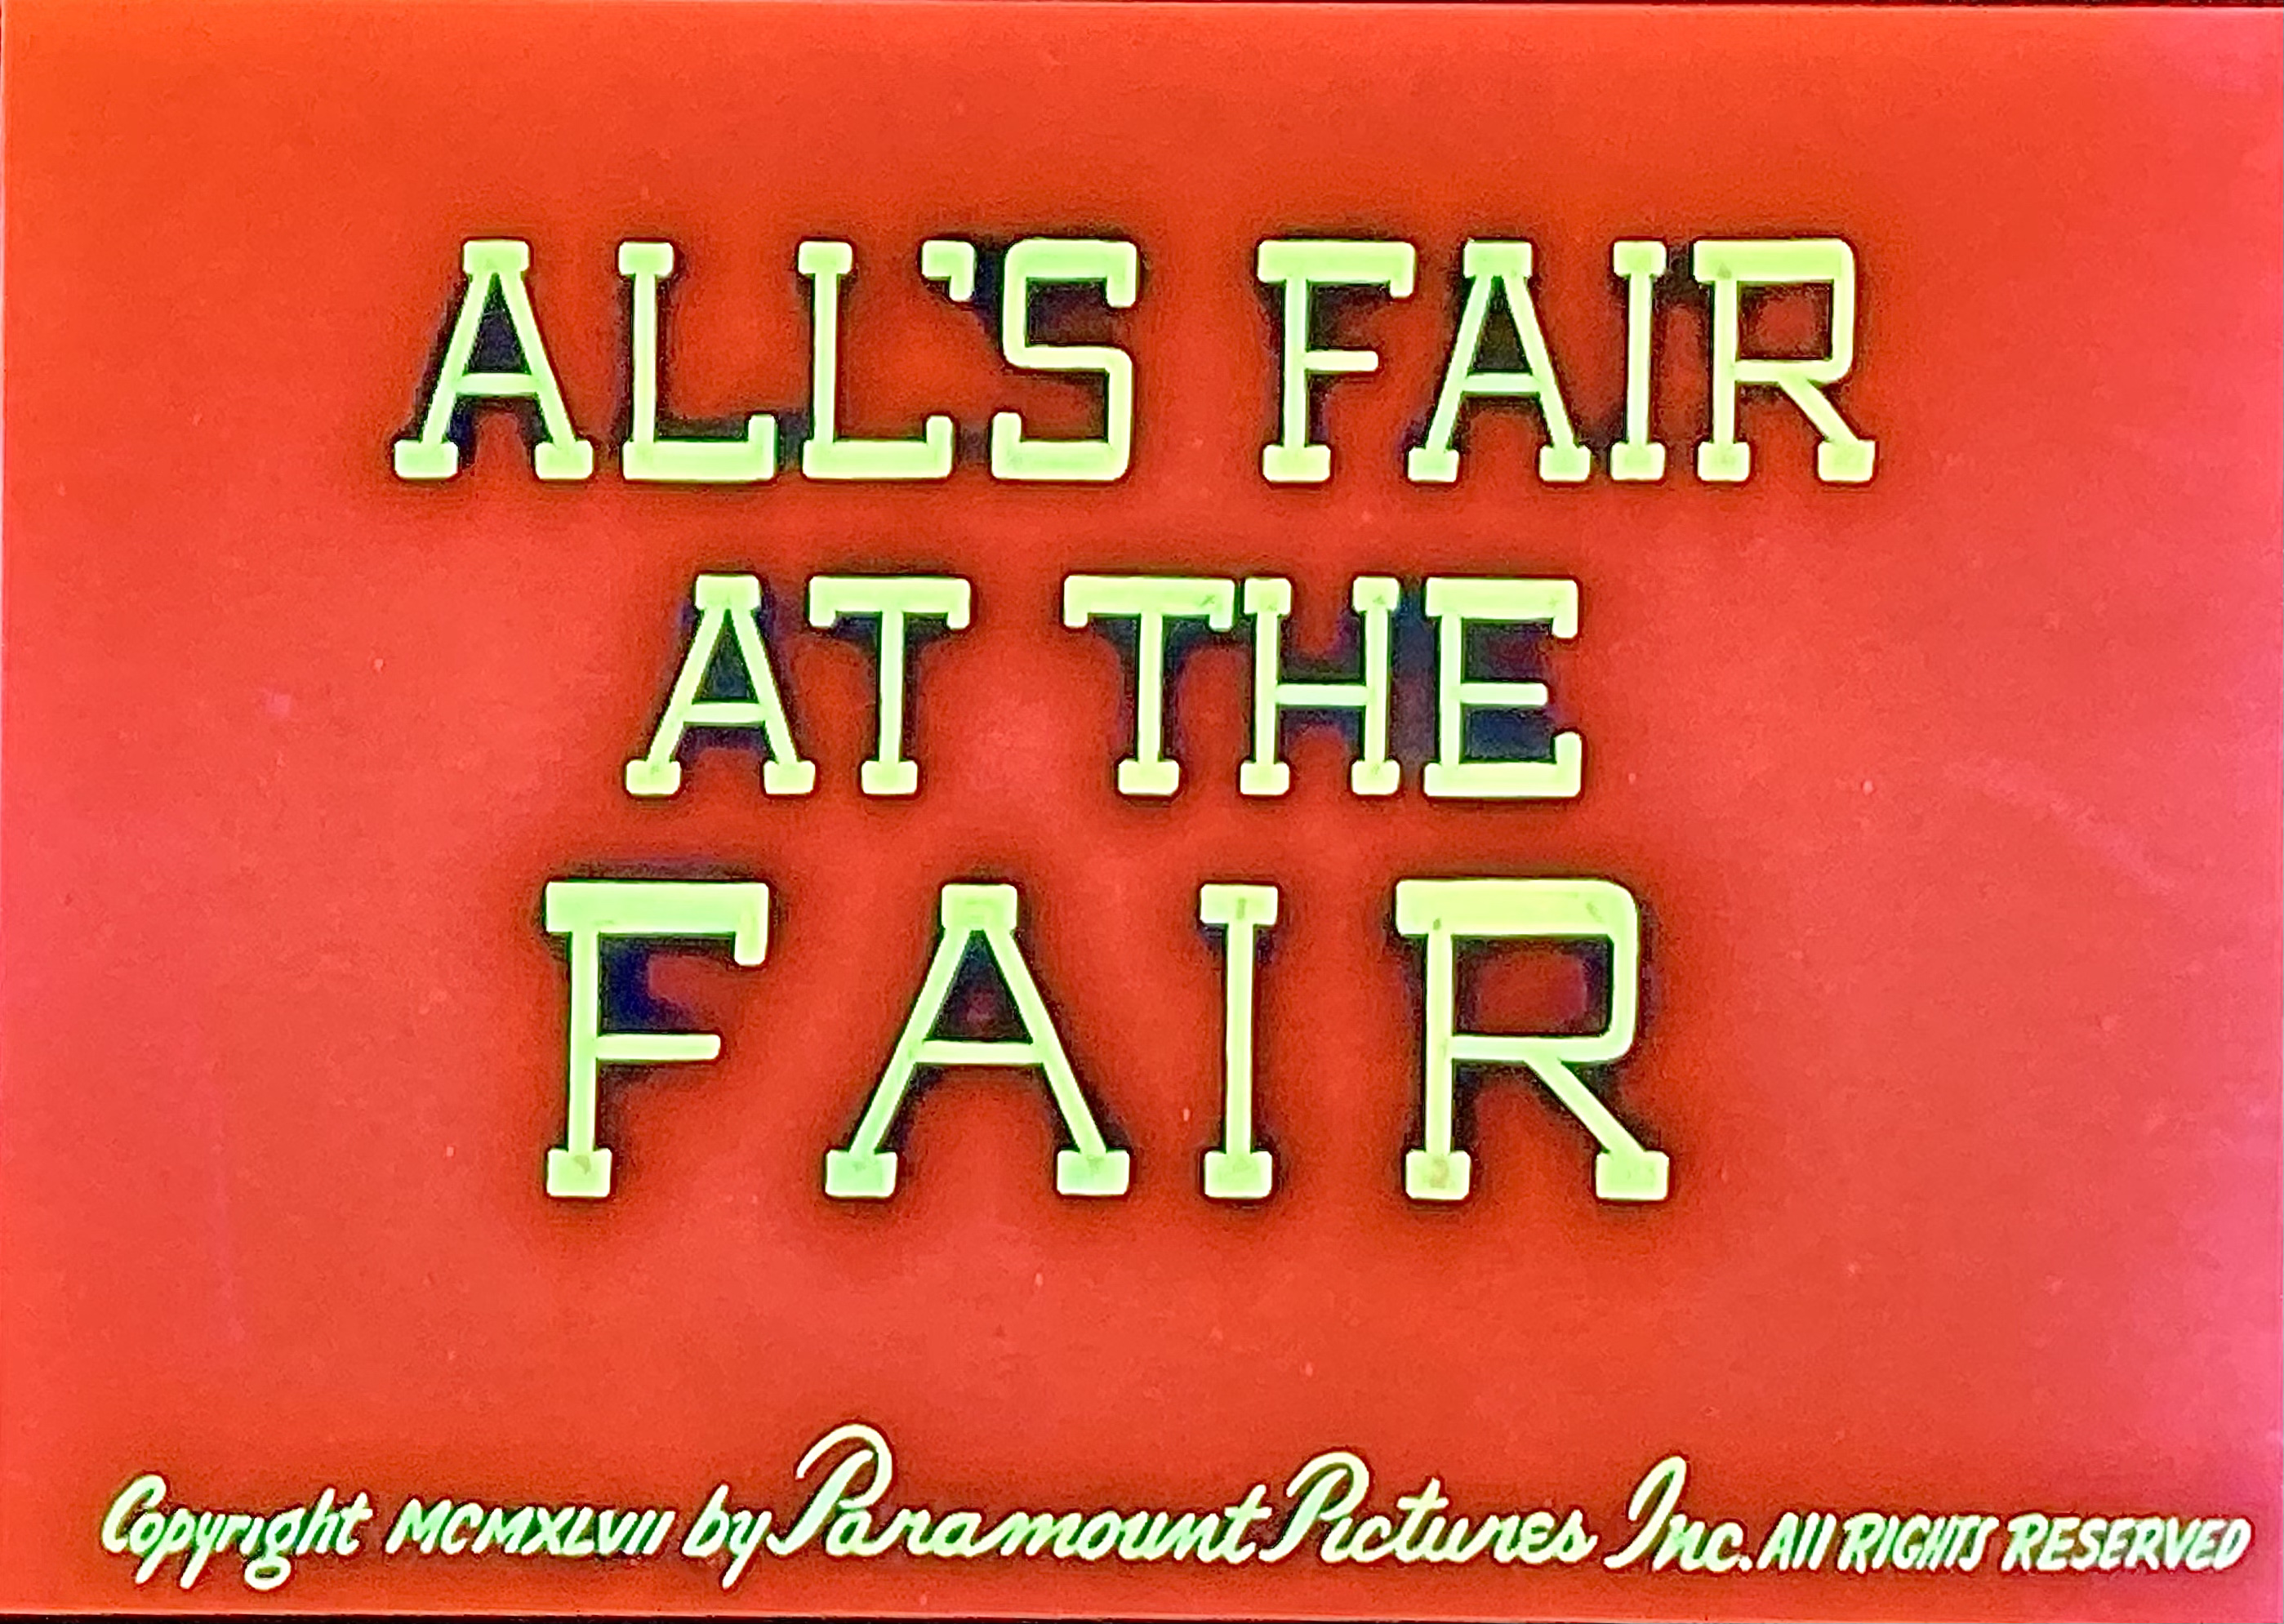 All's Fair at the Fair